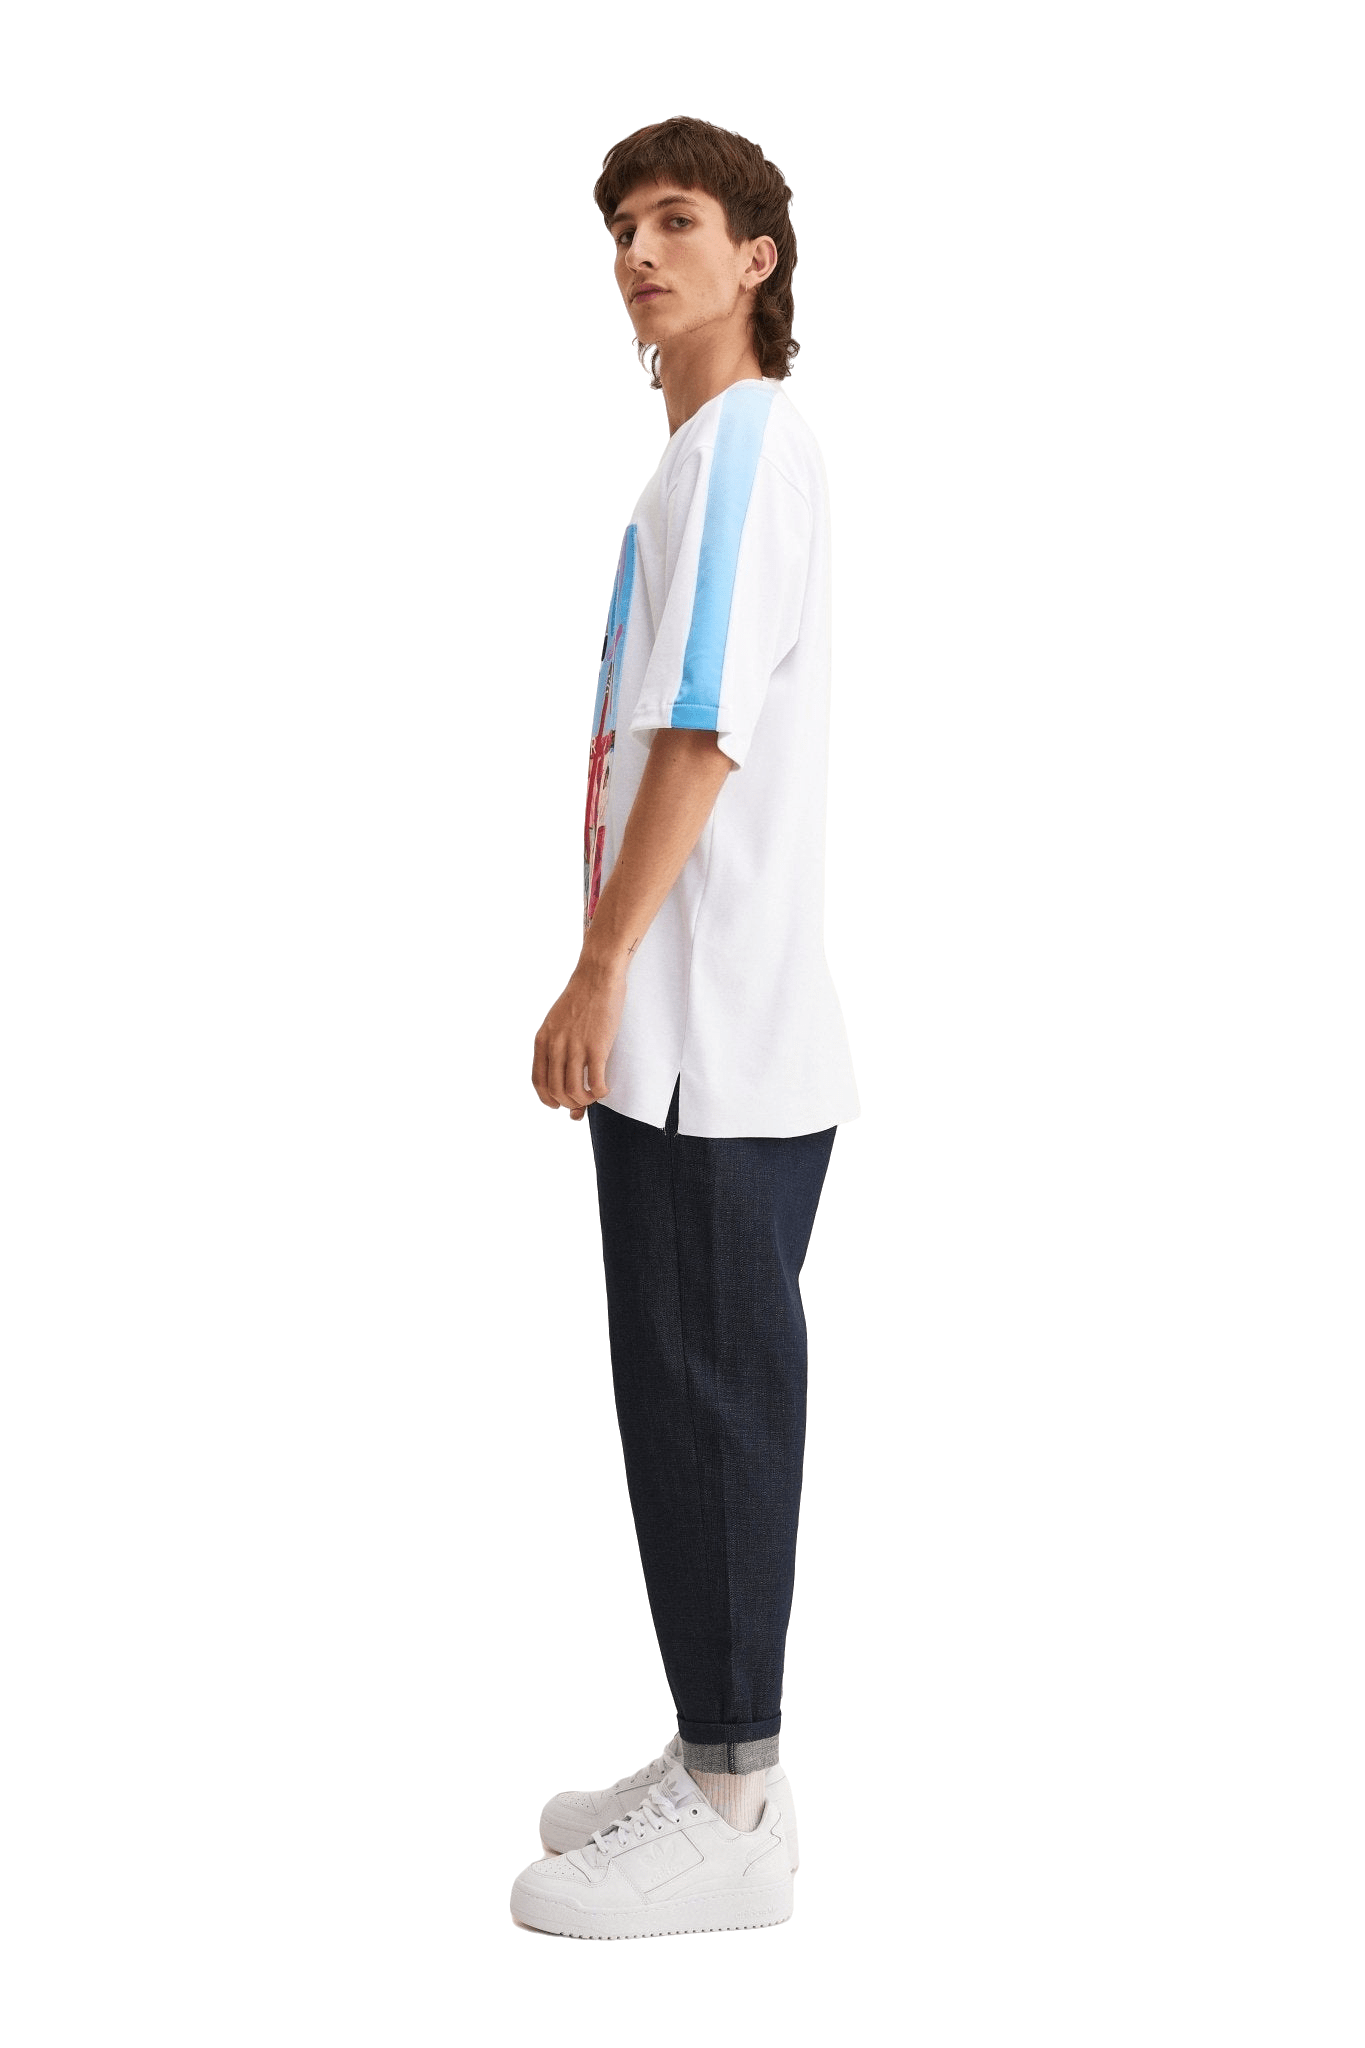 DOER White & Blue T-Shirt - mysimplicated